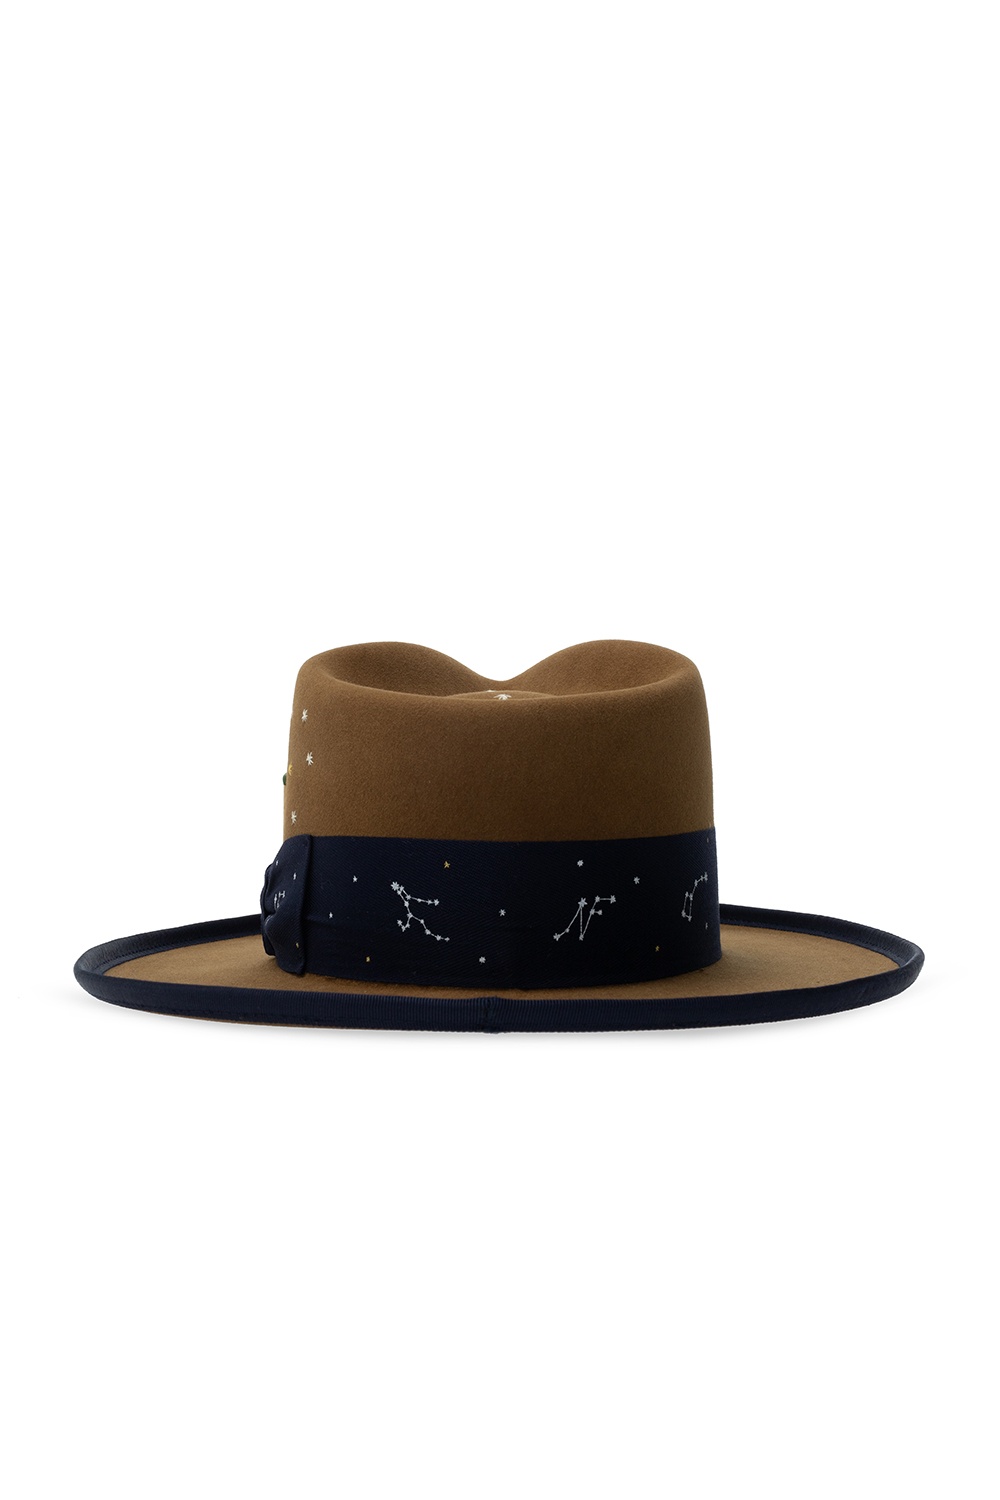 Nick Fouquet ‘Royan’ hat